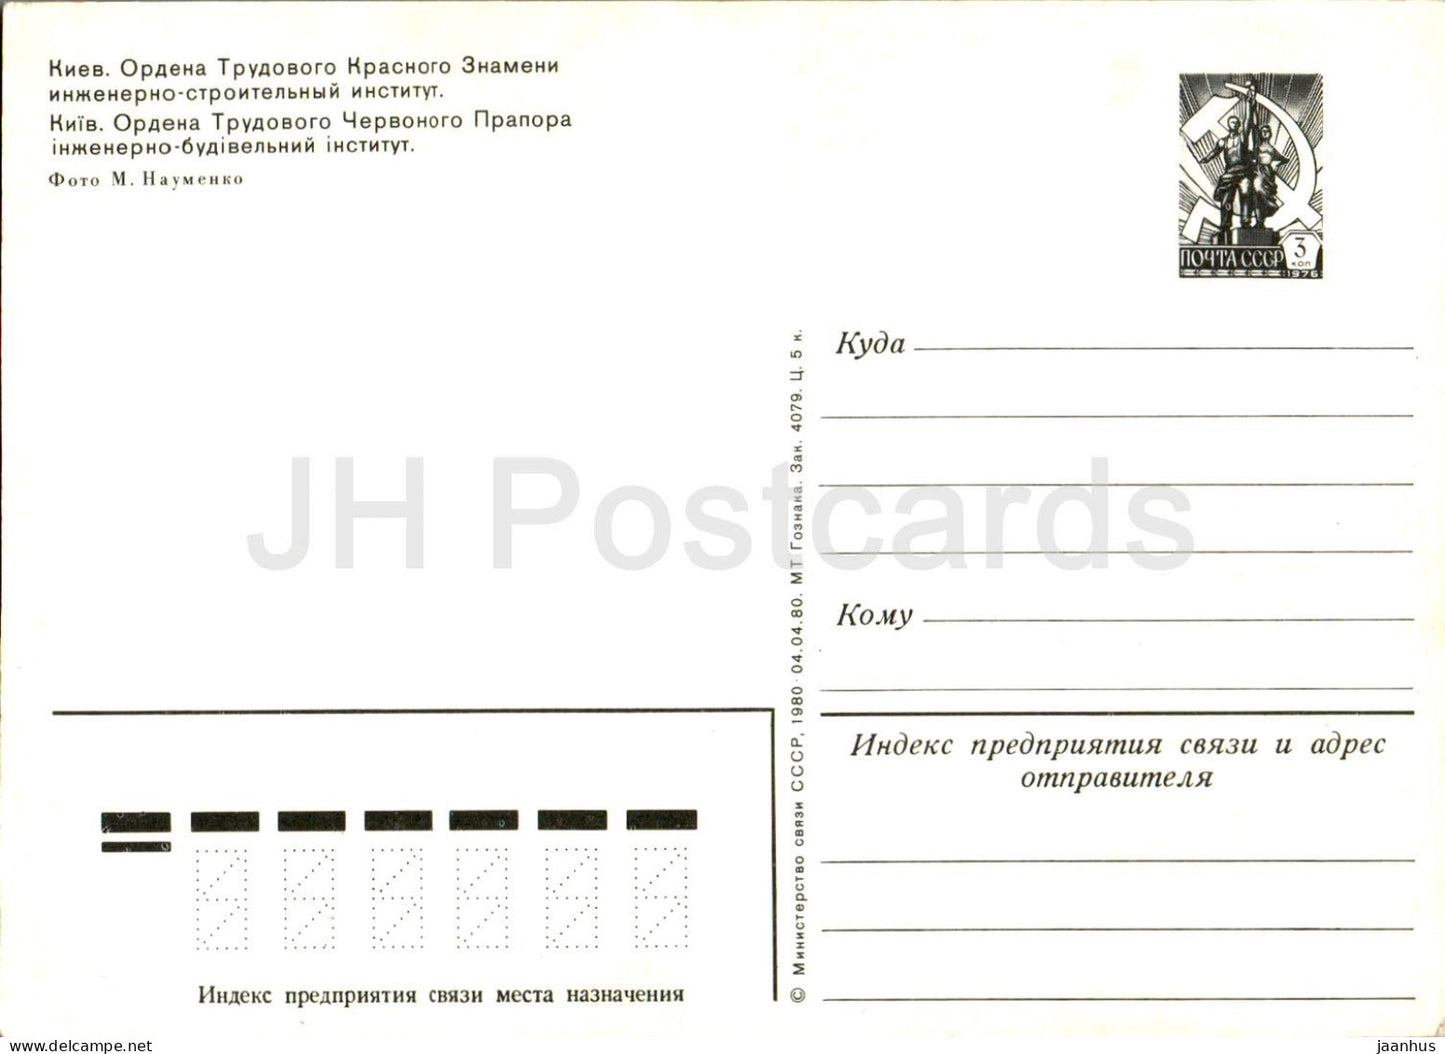 Kiev - Kiev - Institut de génie civil - entier postal - 1980 - Ukraine URSS - inutilisé 